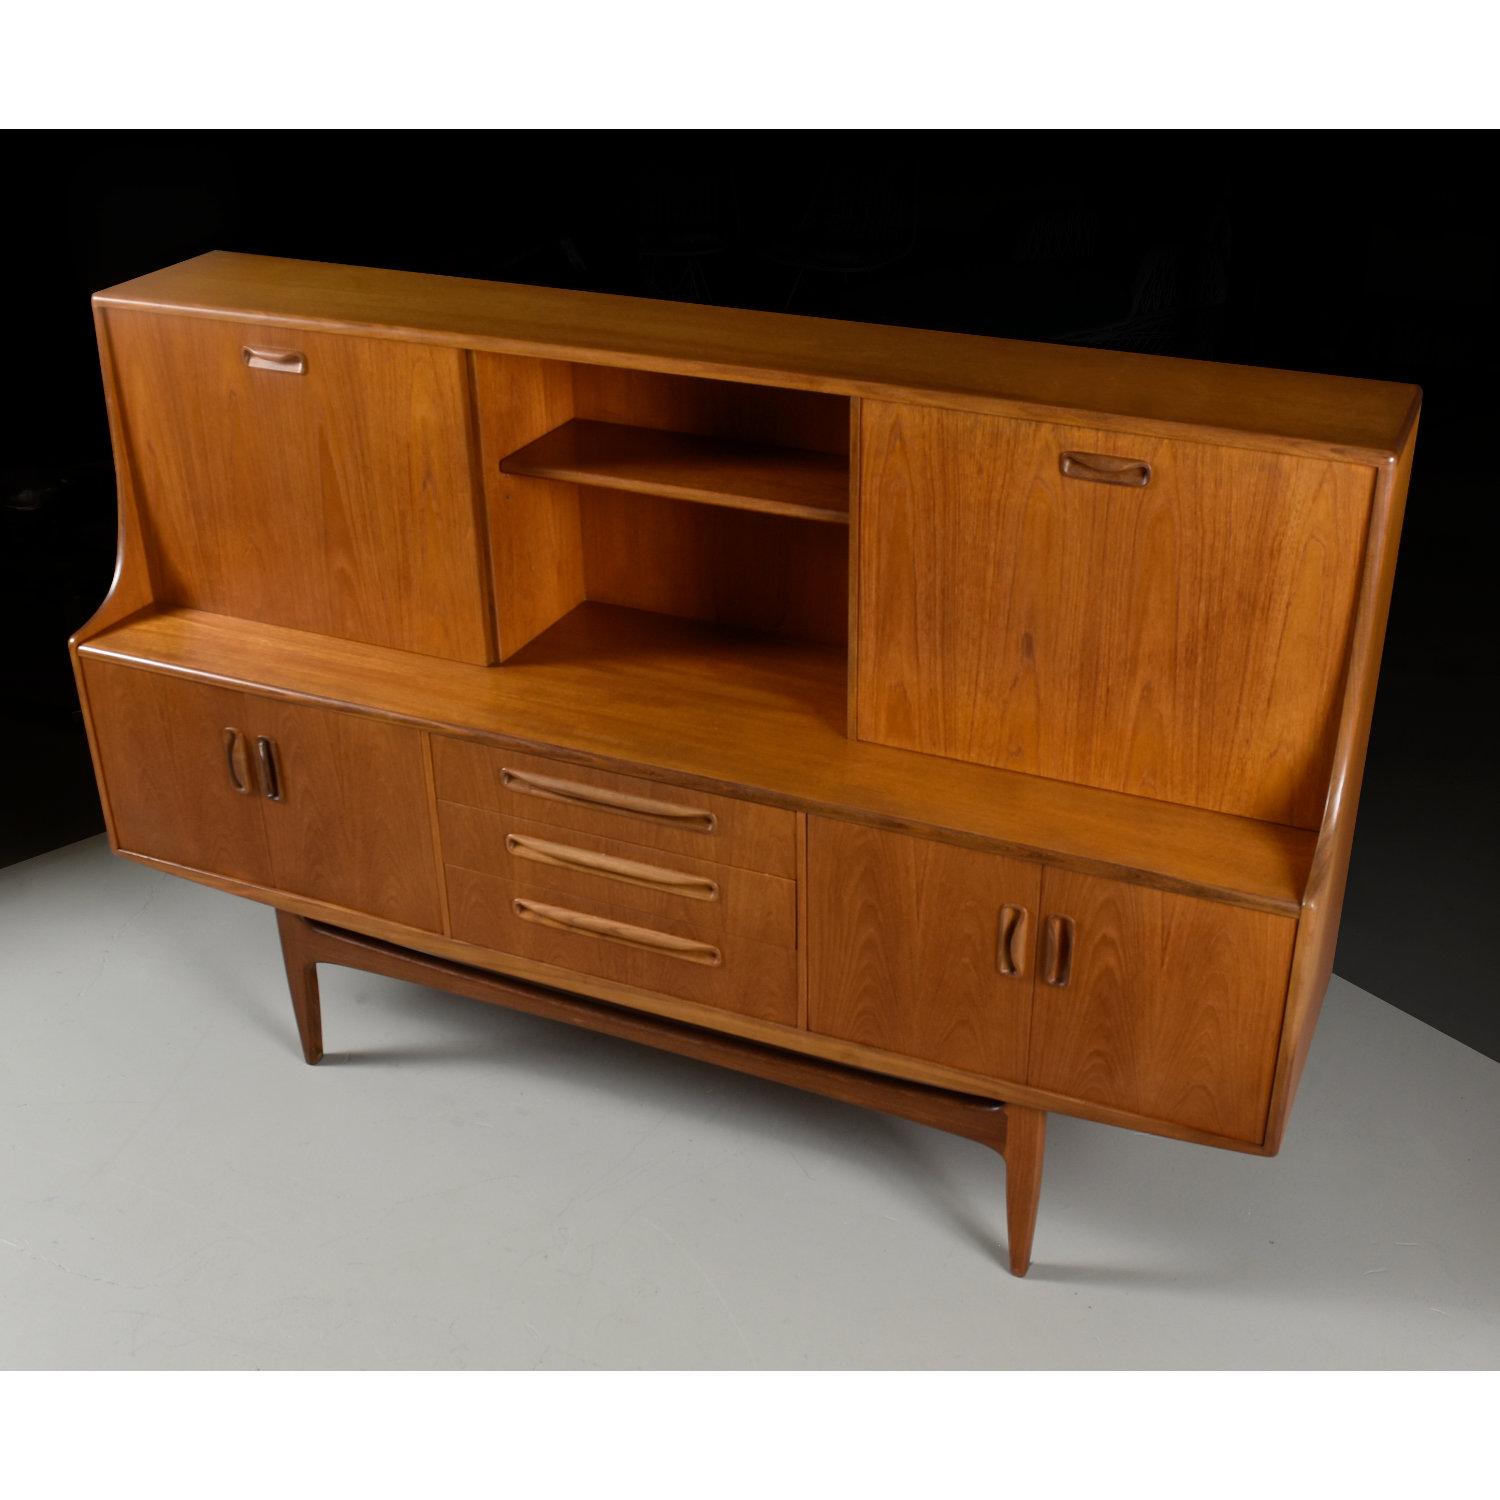 Mid-20th Century Mid-Century Modern Teak Sideboard Hutch Bar by G-Plan Furniture